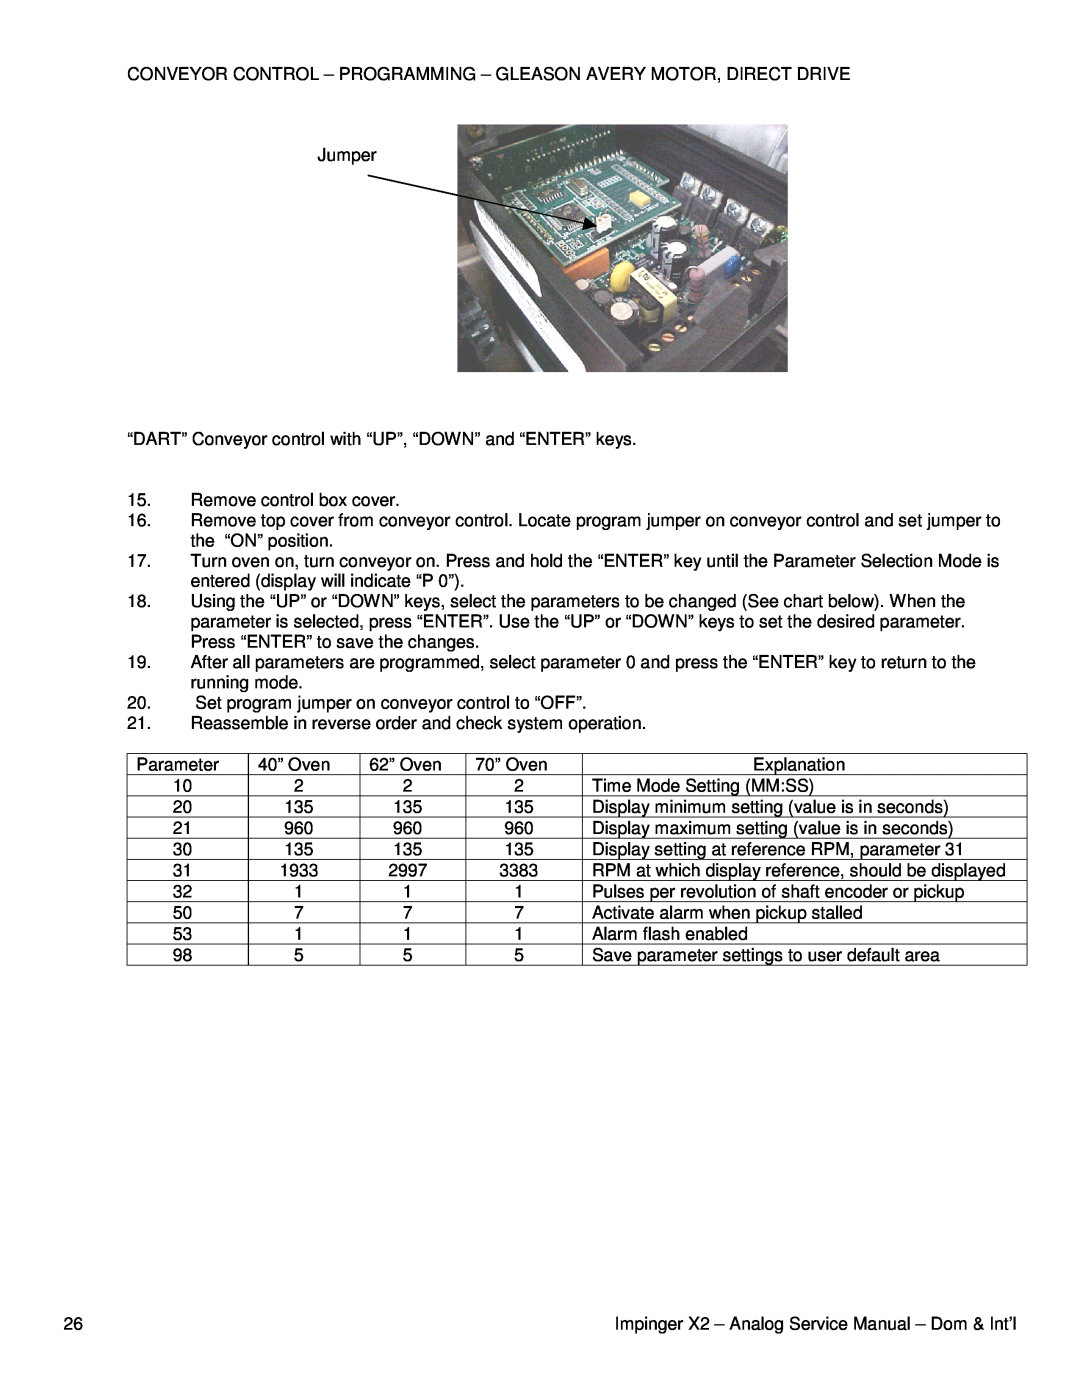 Lincoln 3240-2 Remove control box cover, 1933, 2997, 3383, Jumper, Parameter, 40” Oven, 62” Oven, 70” Oven, Explanation 